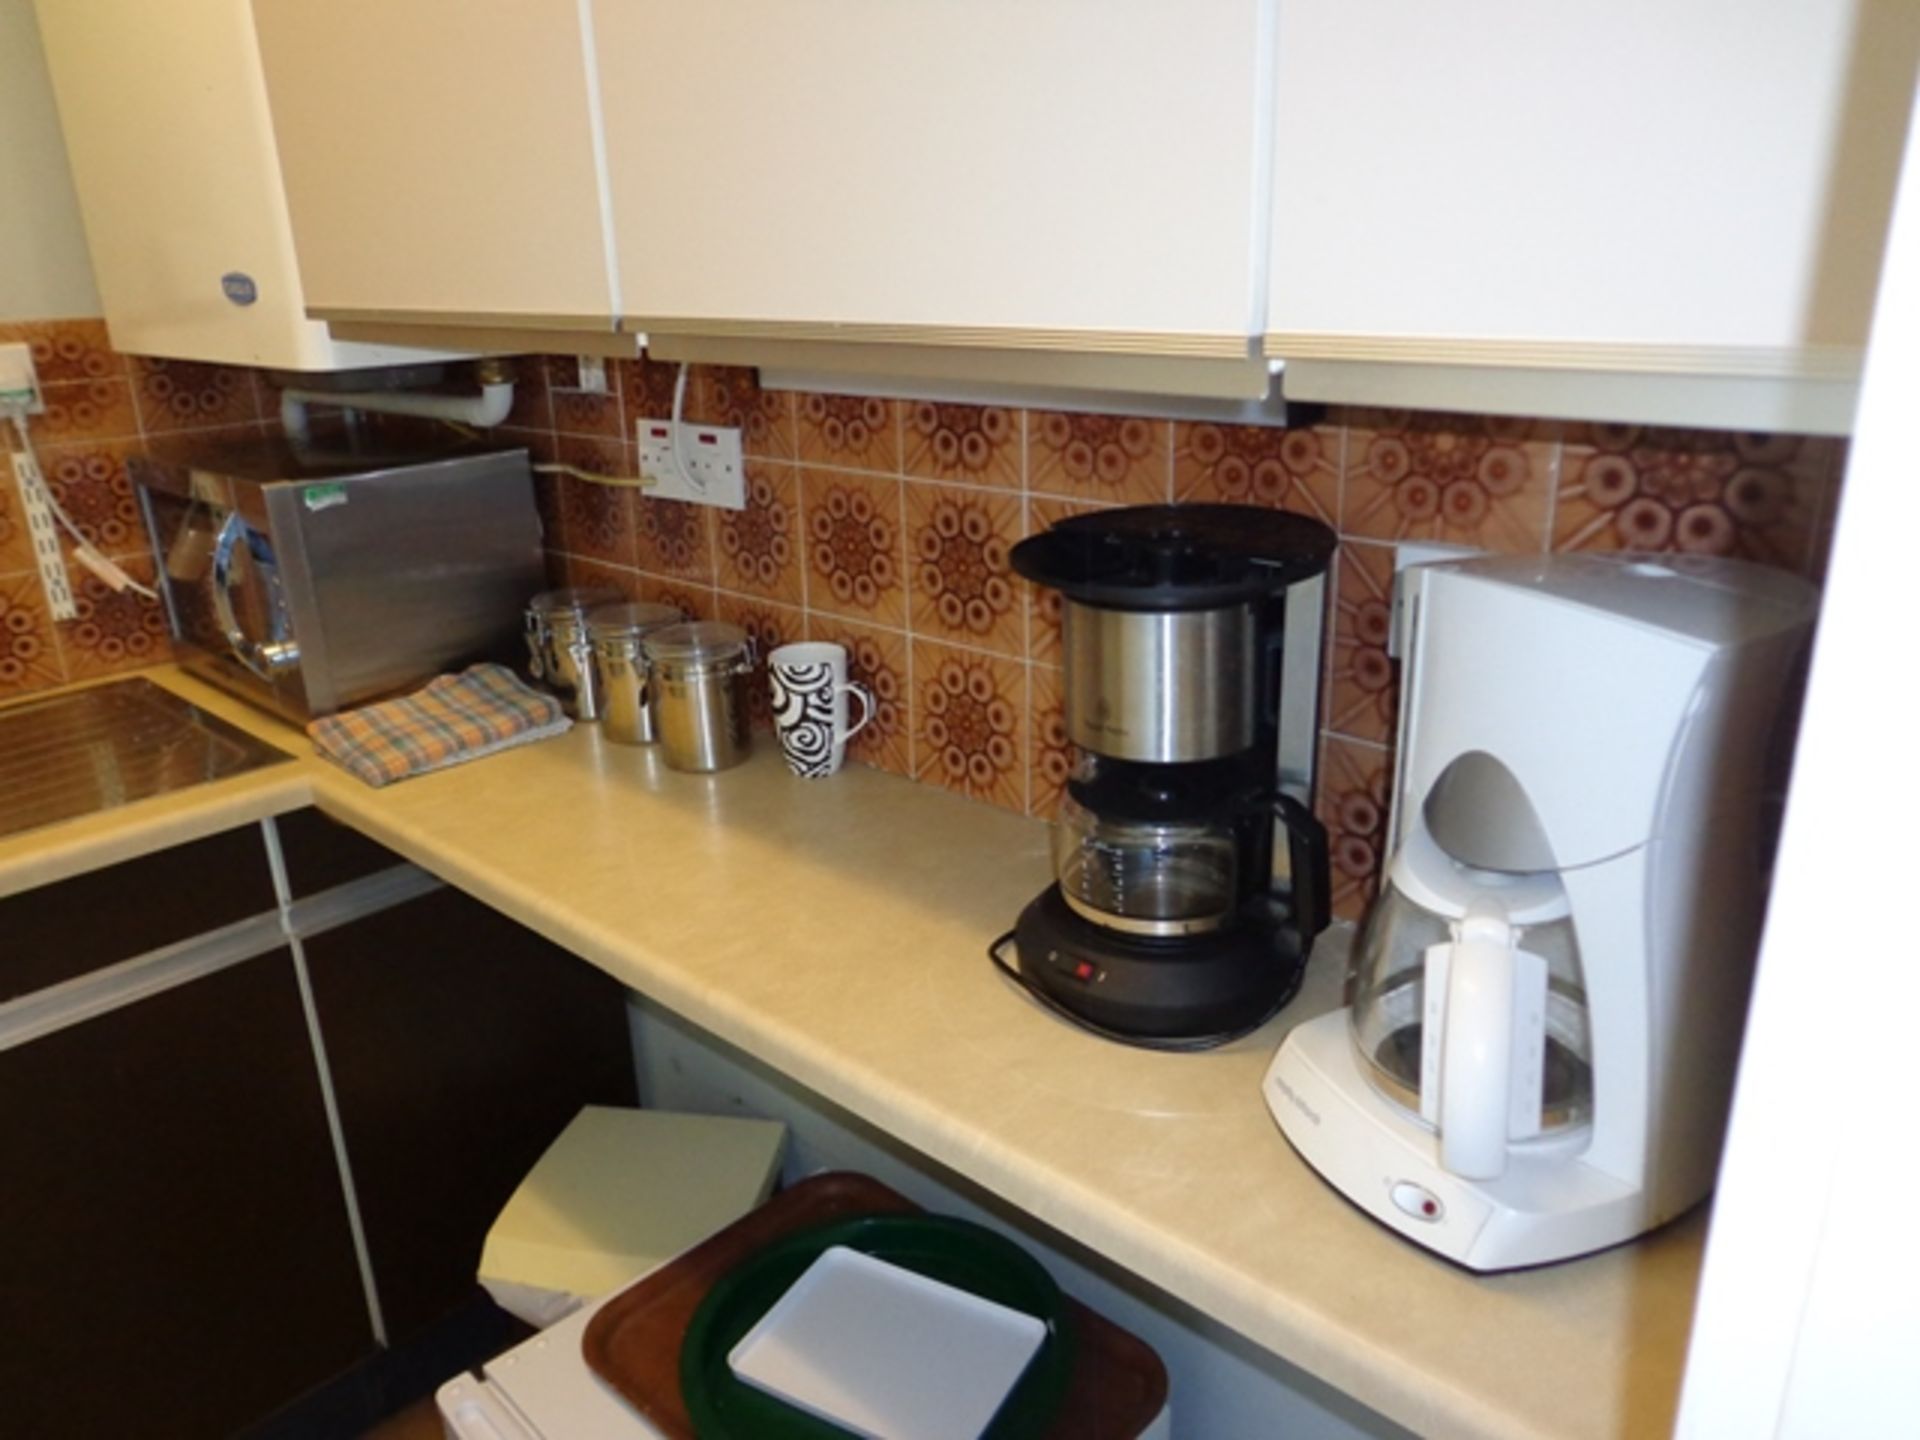 Matsui Counter Top Fridge, Hinari Microwave and Coffee Machine/Percolators - Image 2 of 2